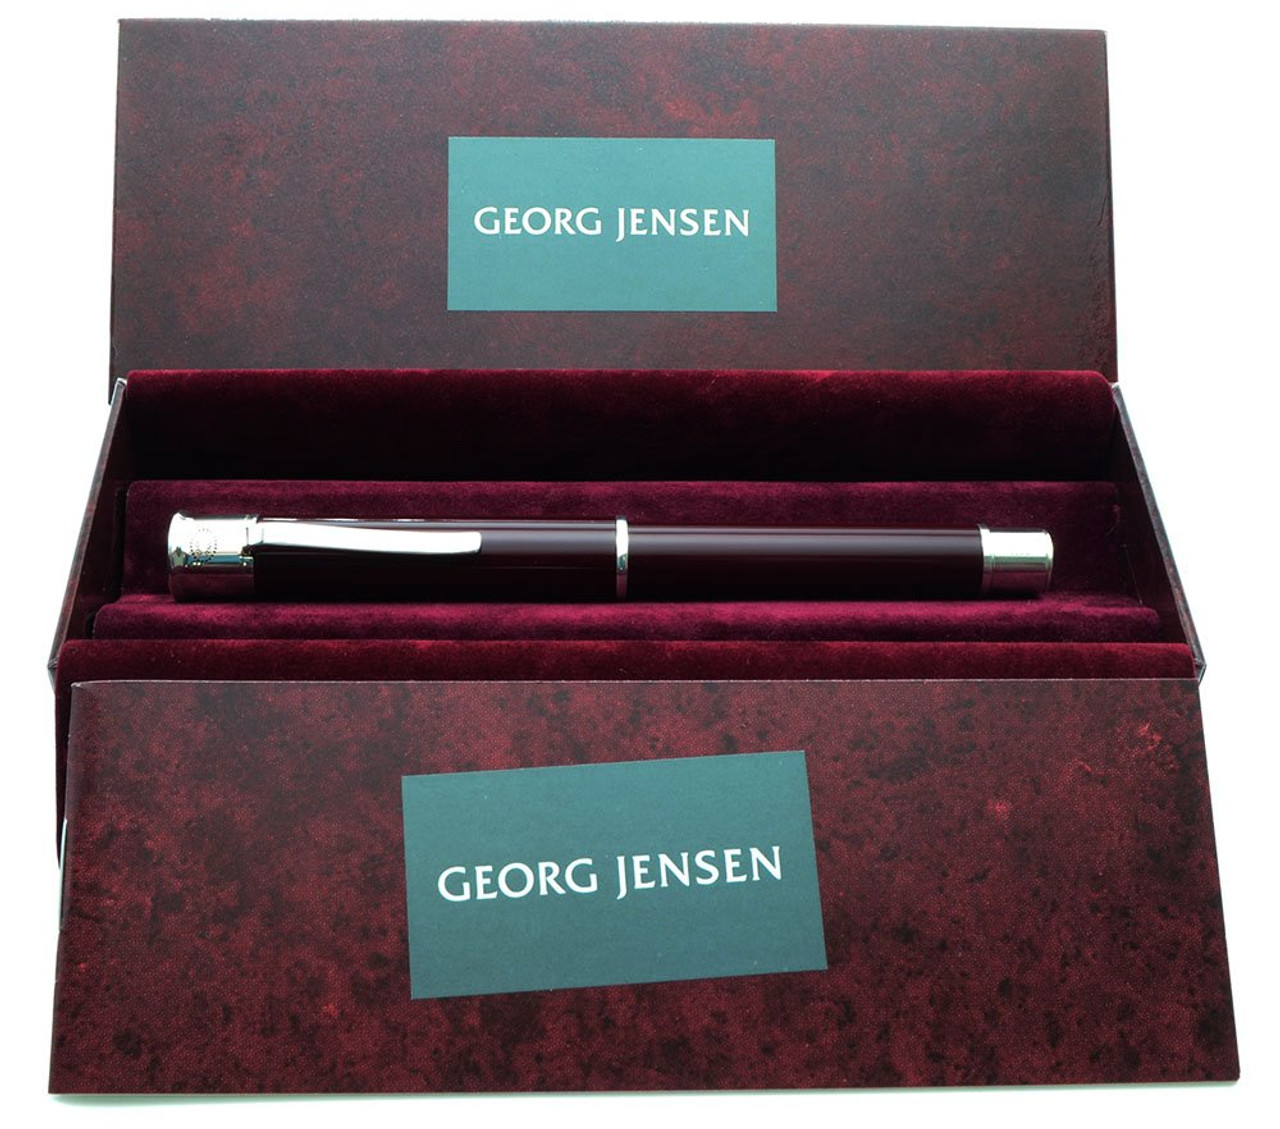 Georg Jensen Fountain Pen - Oversize, Sterling w Lacquer, 18K Nib (New in Box, Perfect Condition)